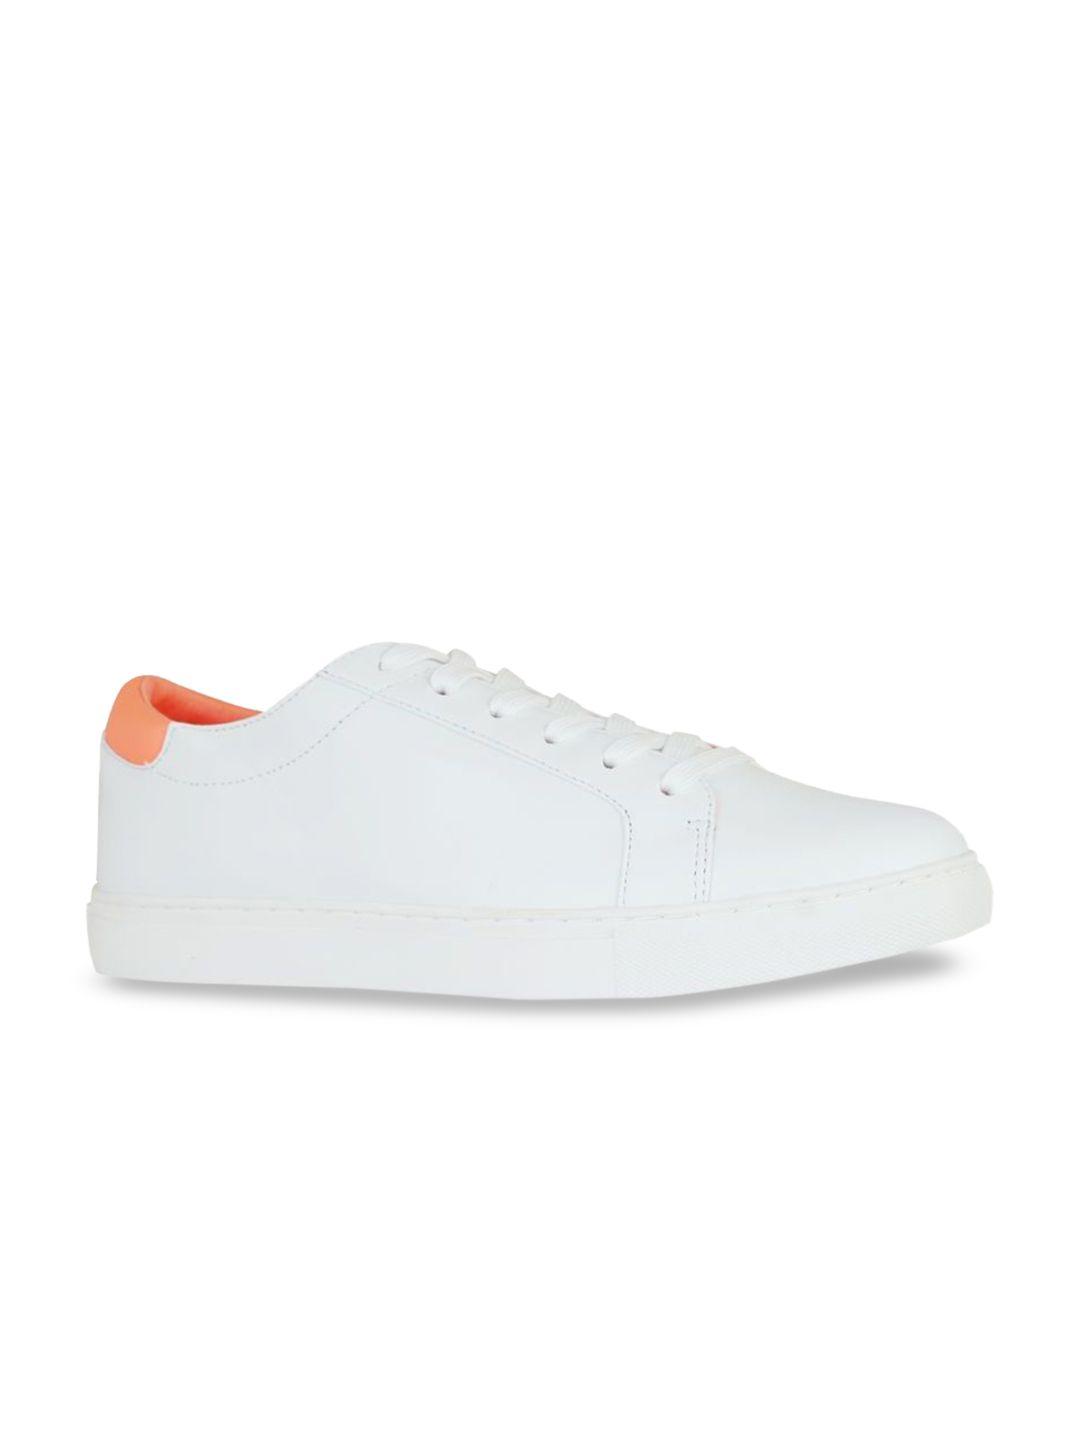 kenneth-cole-women-white-&-orange-colourblocked-leather-lightweight-sneakers